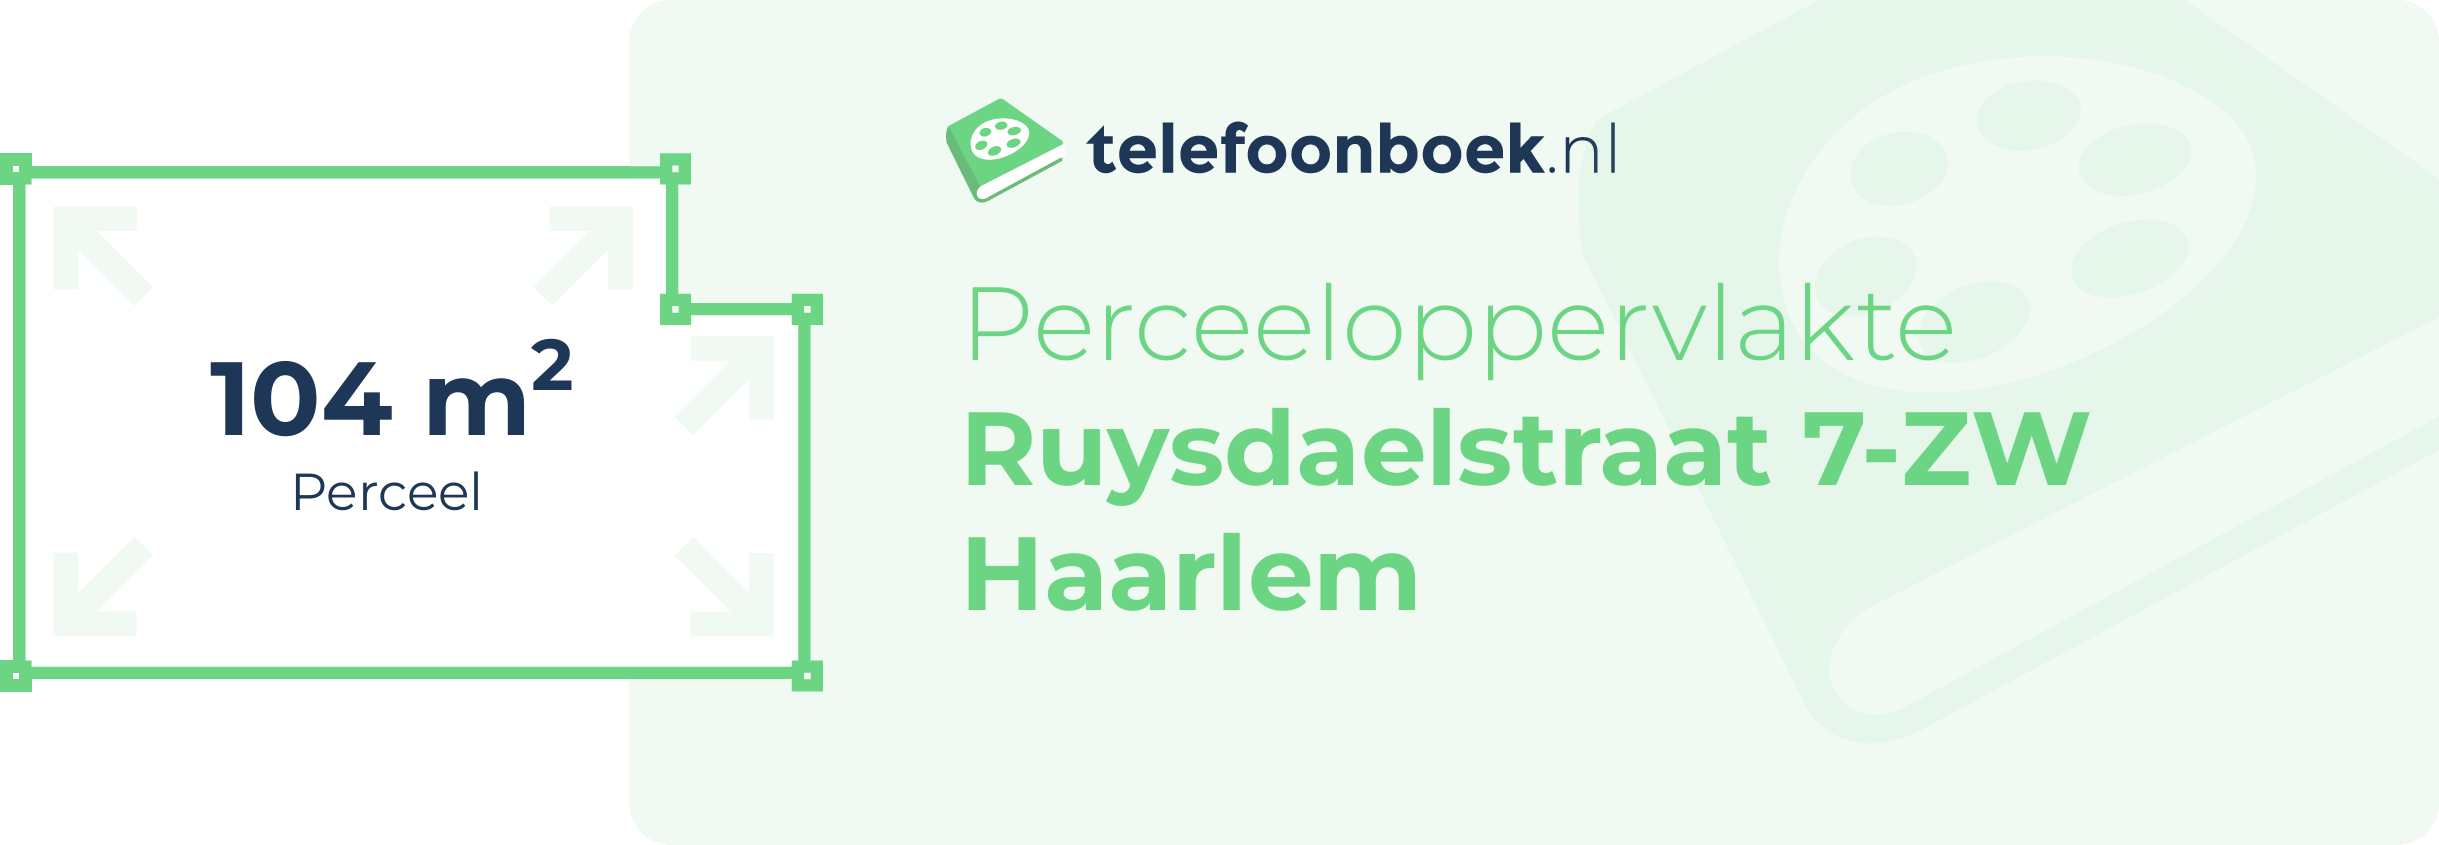 Perceeloppervlakte Ruysdaelstraat 7-ZW Haarlem